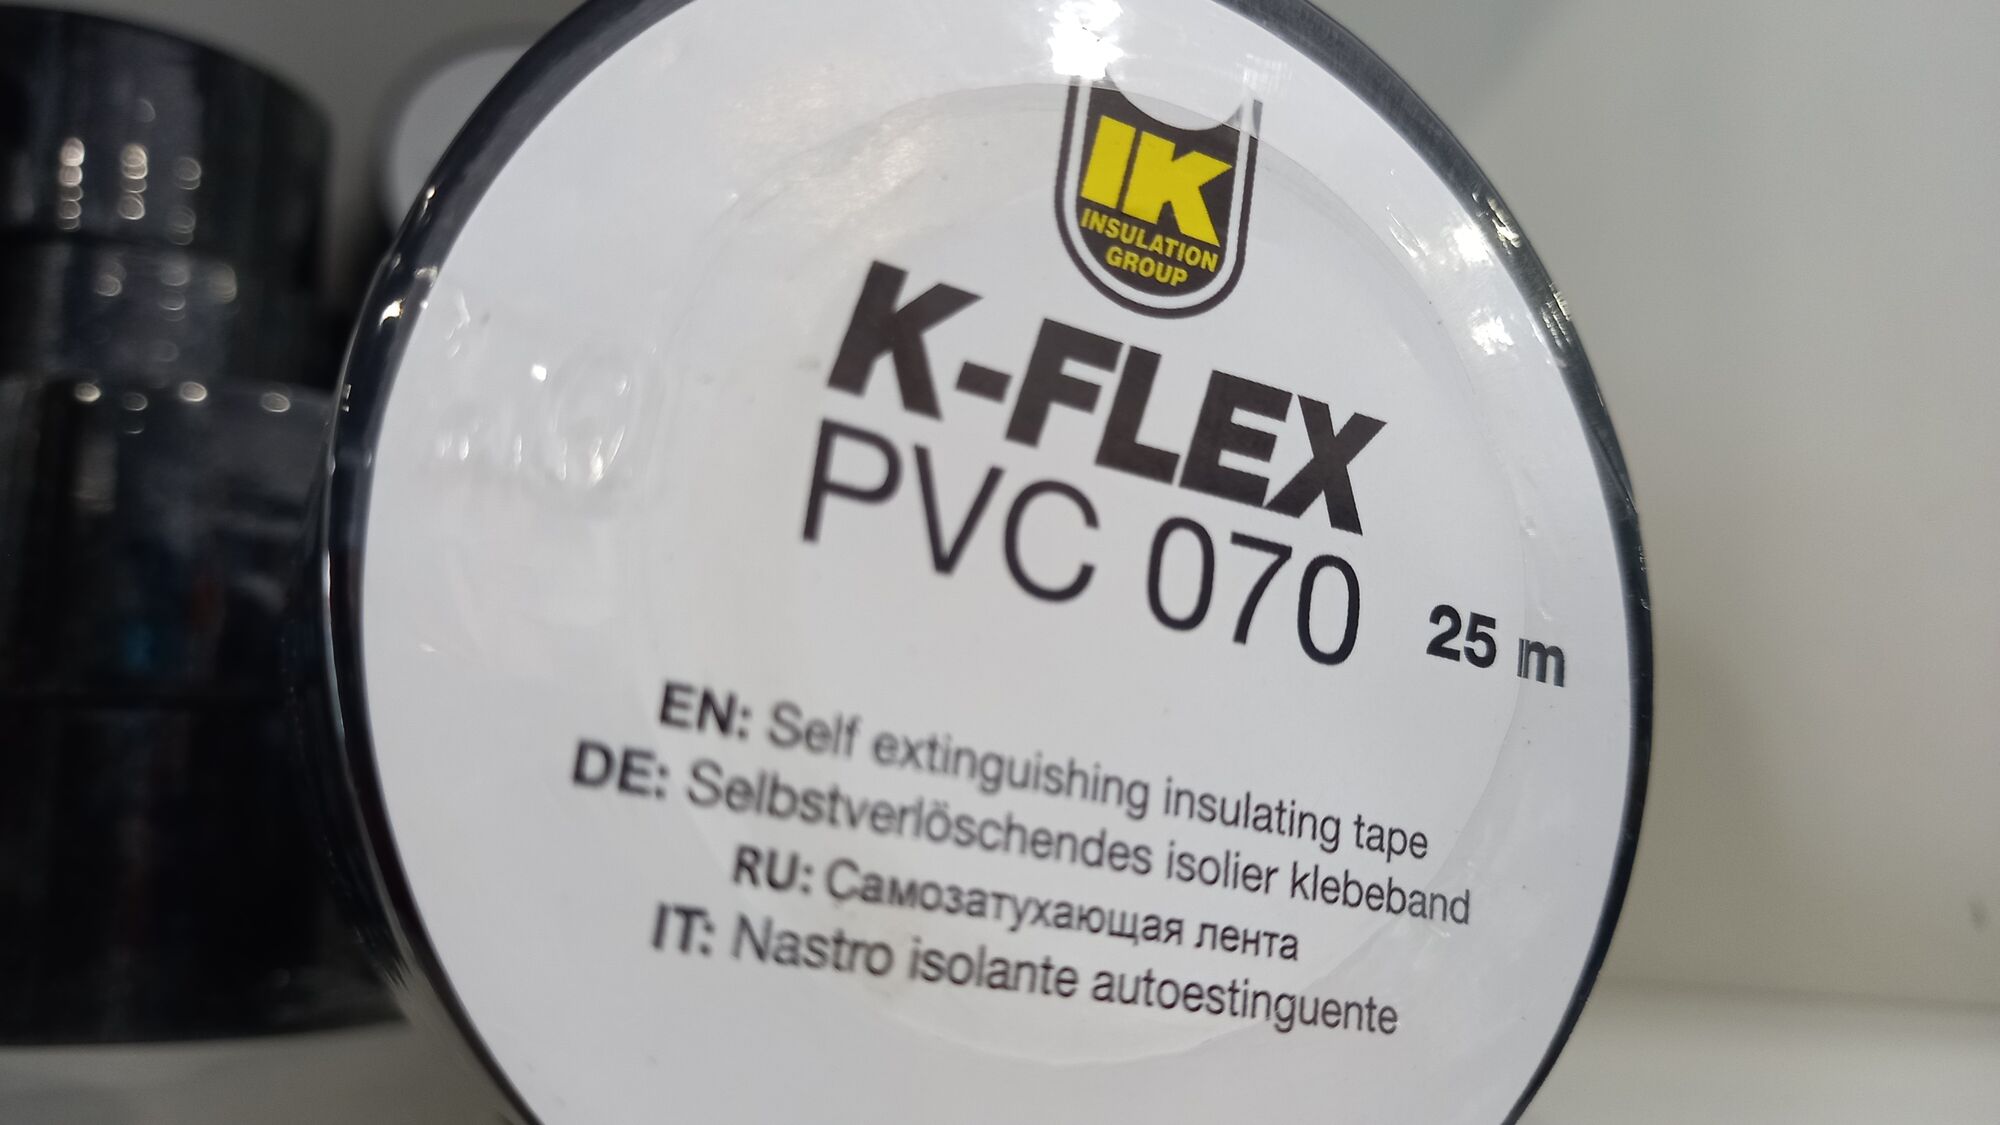 Лента k-Flex 050-025 PVC at 070 Black. Маркировку к-флекса. Лента ПВХ 50ммх50м черная.